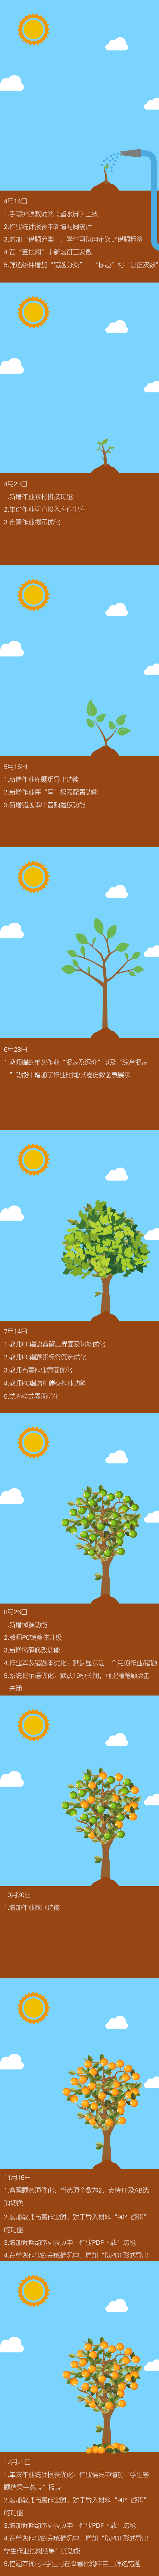 uNote电子墨水屏智慧作业系统2020年功能“橙”长树